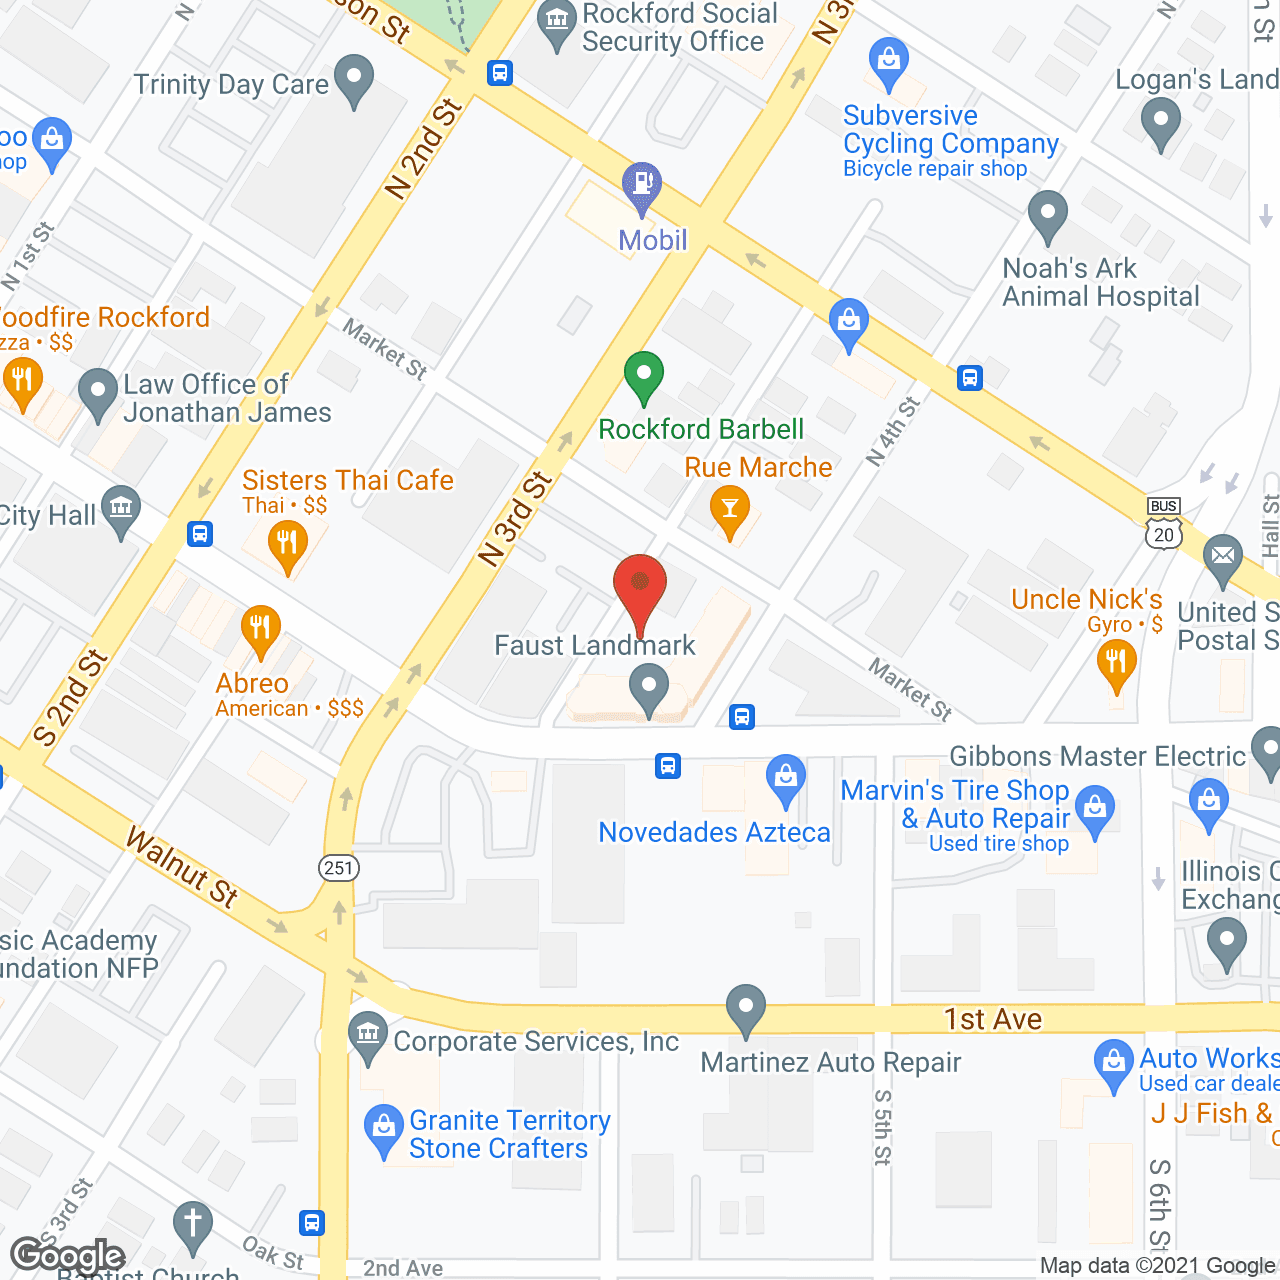 Faust Landmark Apartments in google map